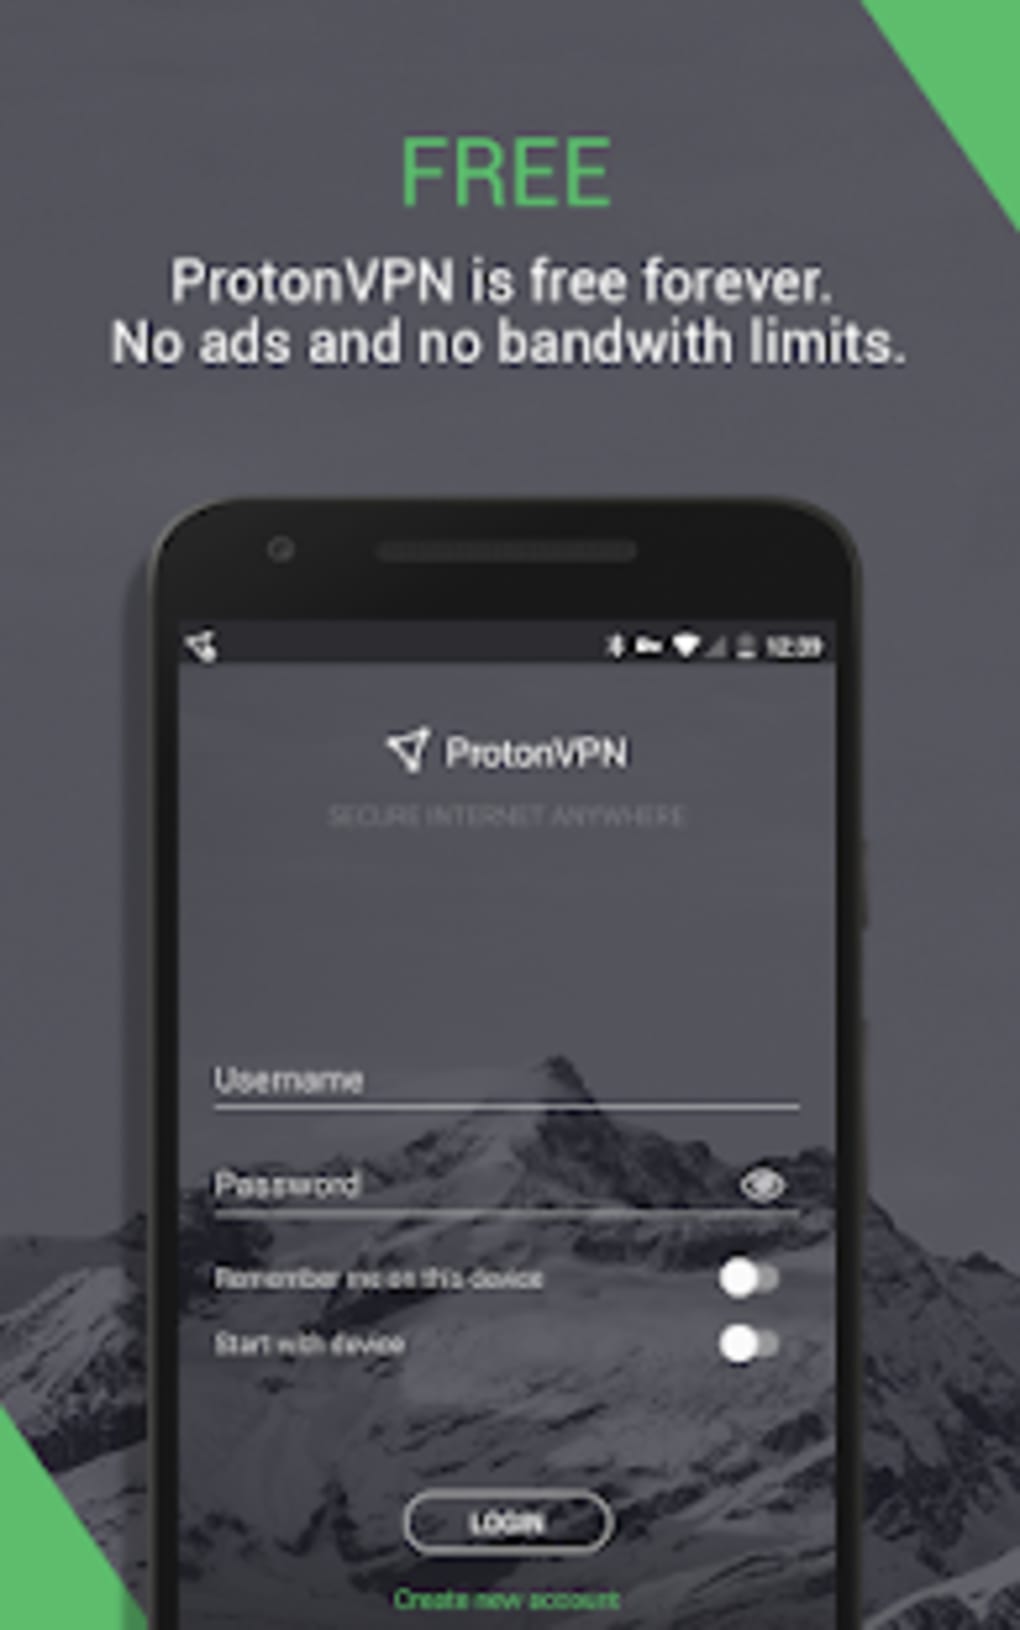 protonvpn free premium account